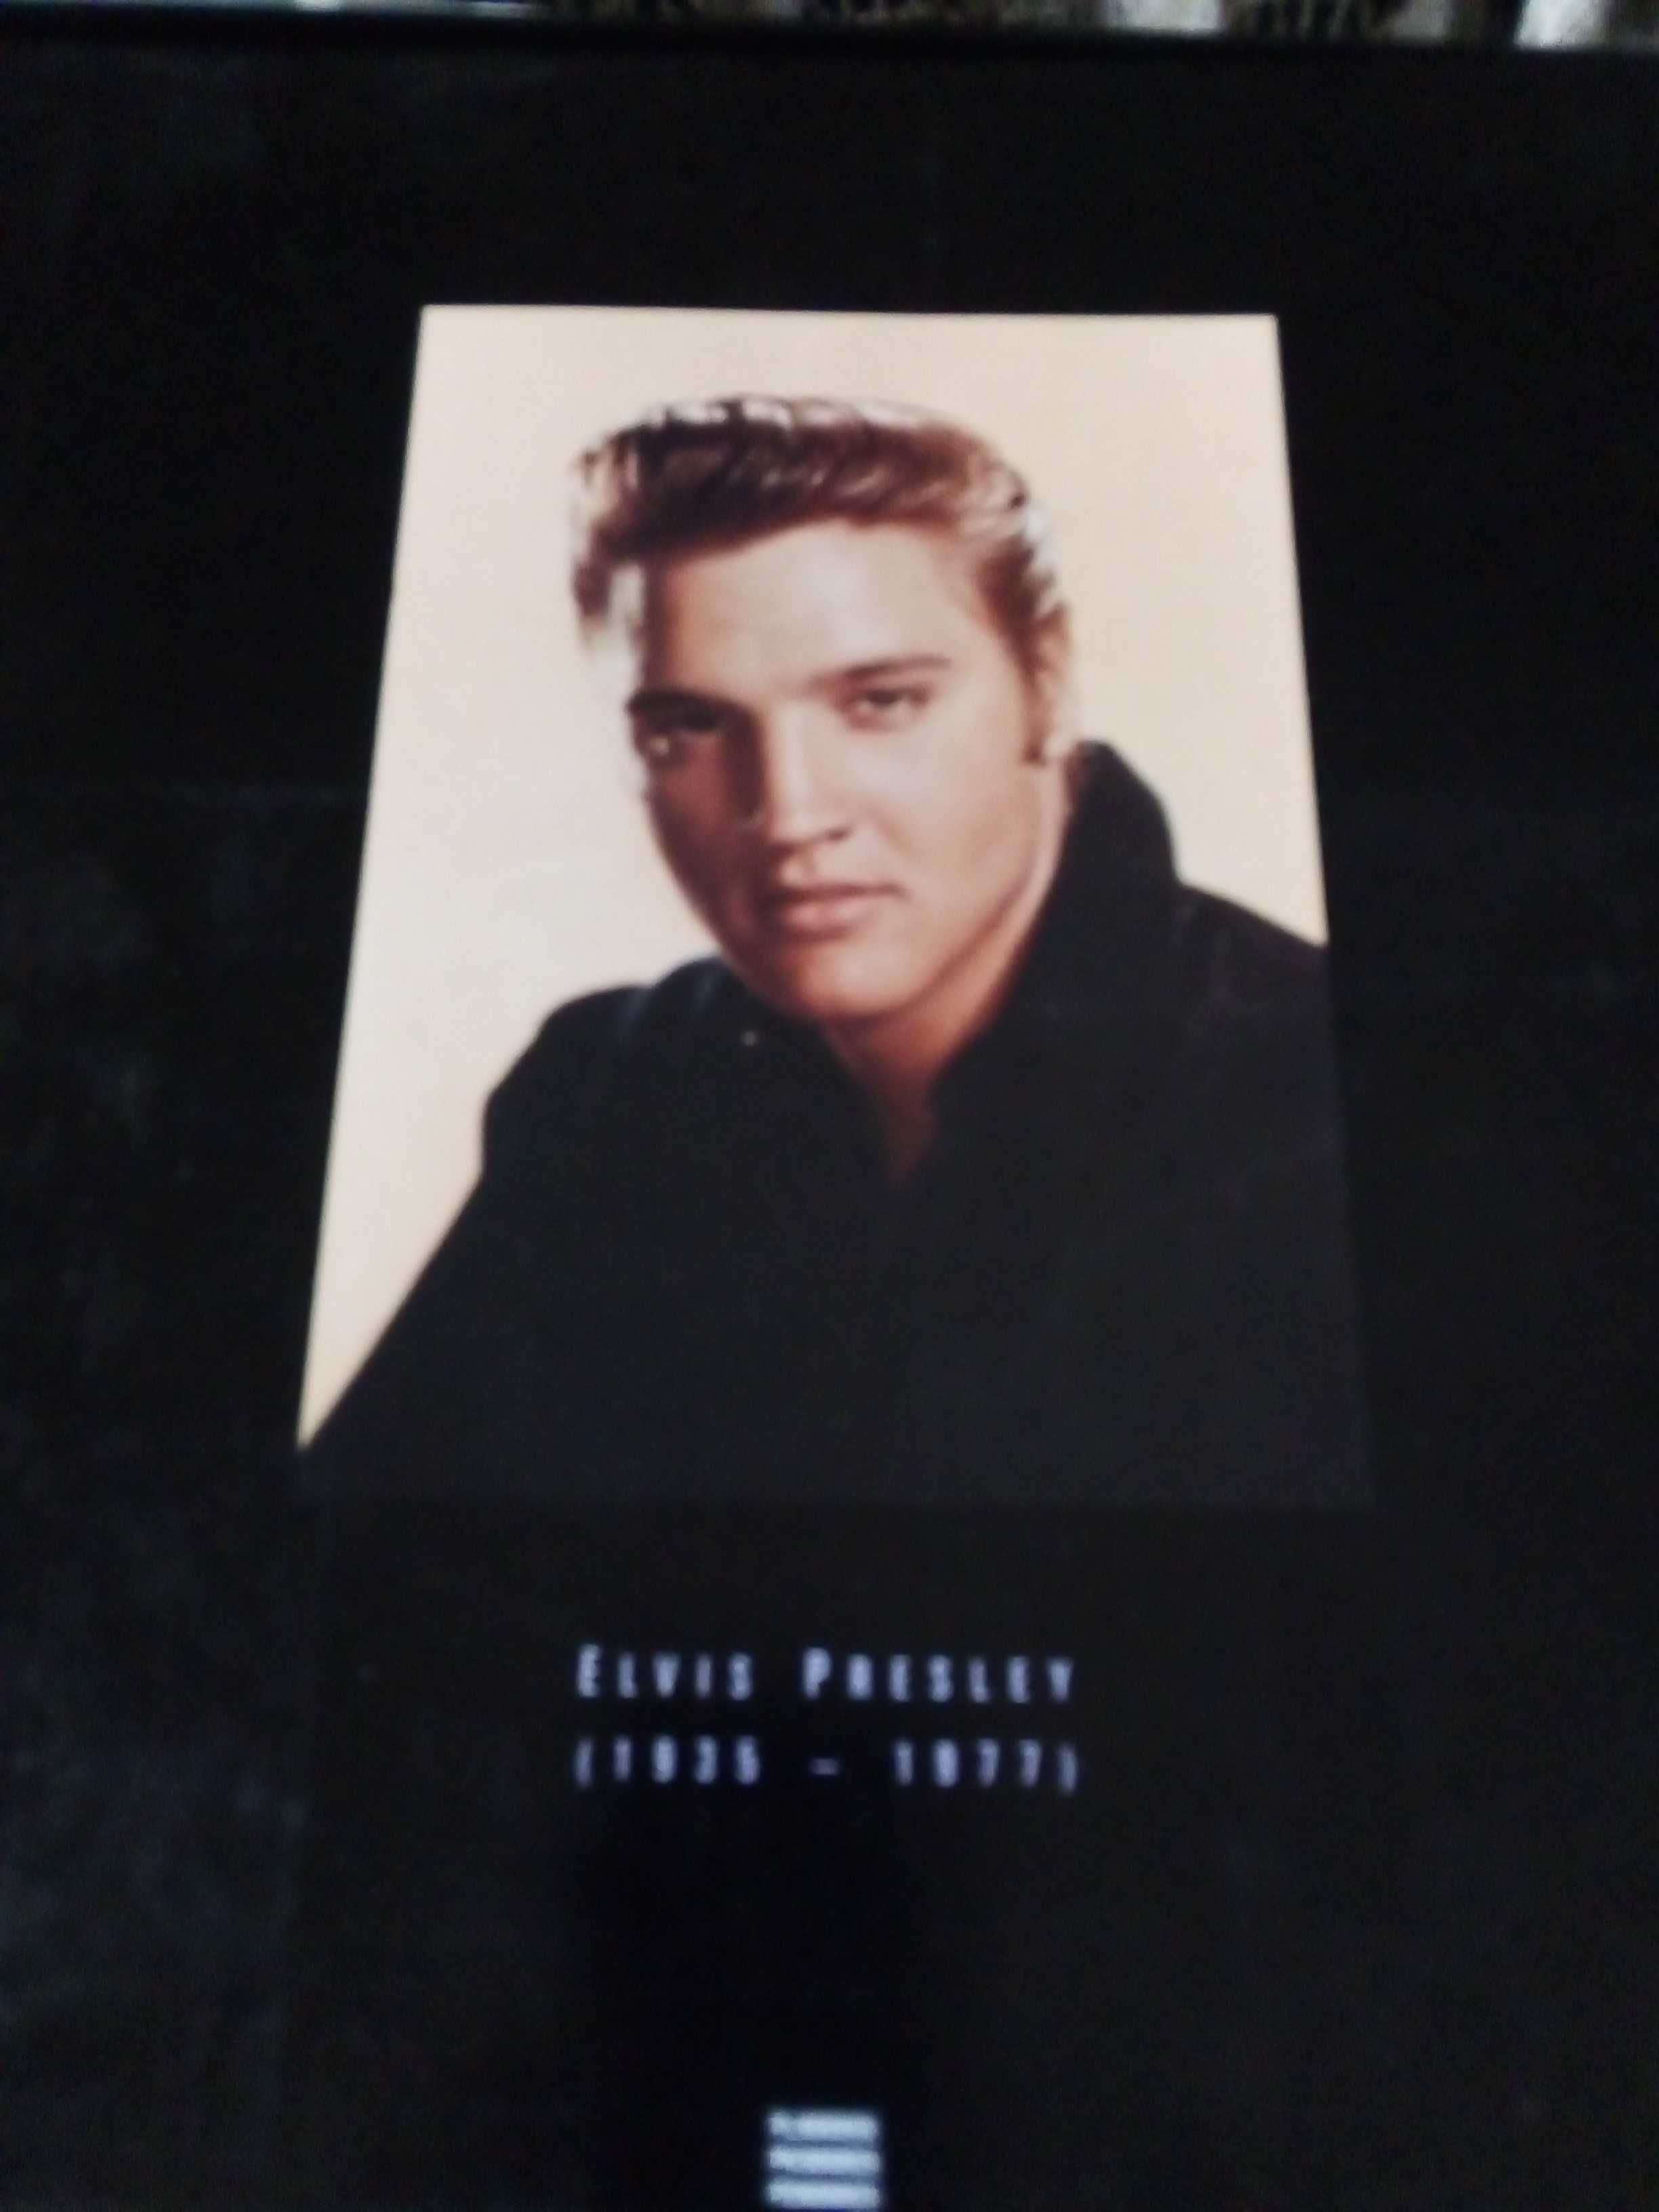 Box 5 cd Elvis presley